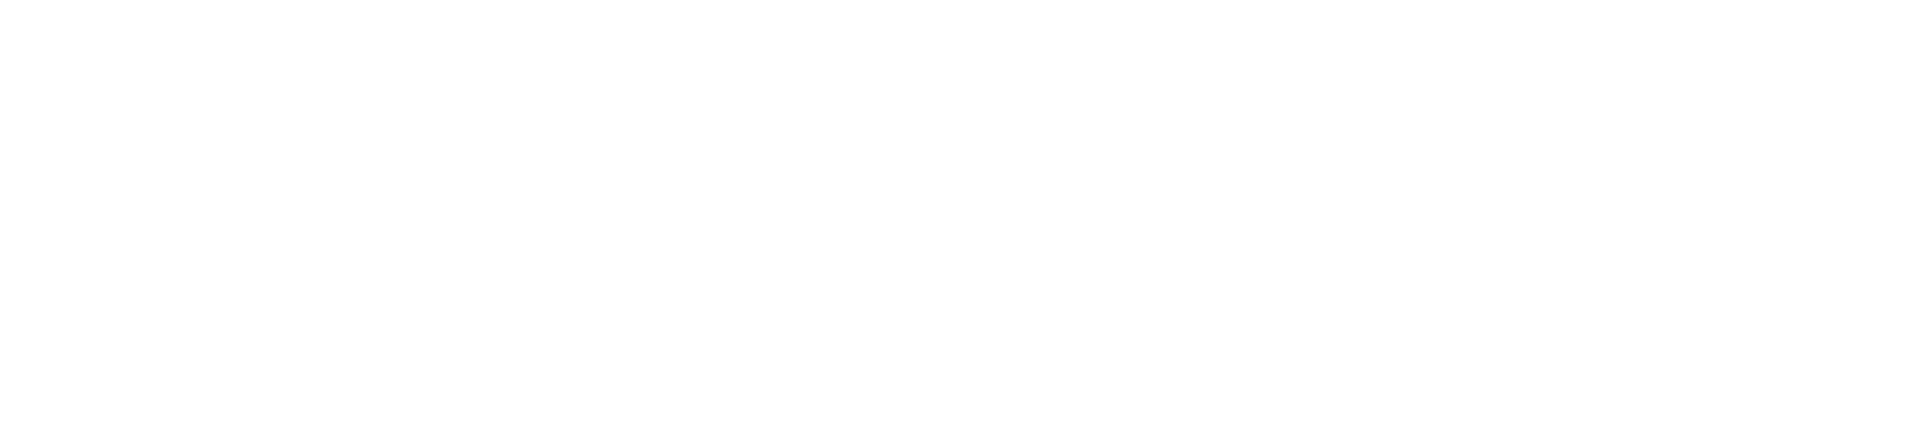 Smith Morgan LLP - Personal Injury Attorneys Salem OR